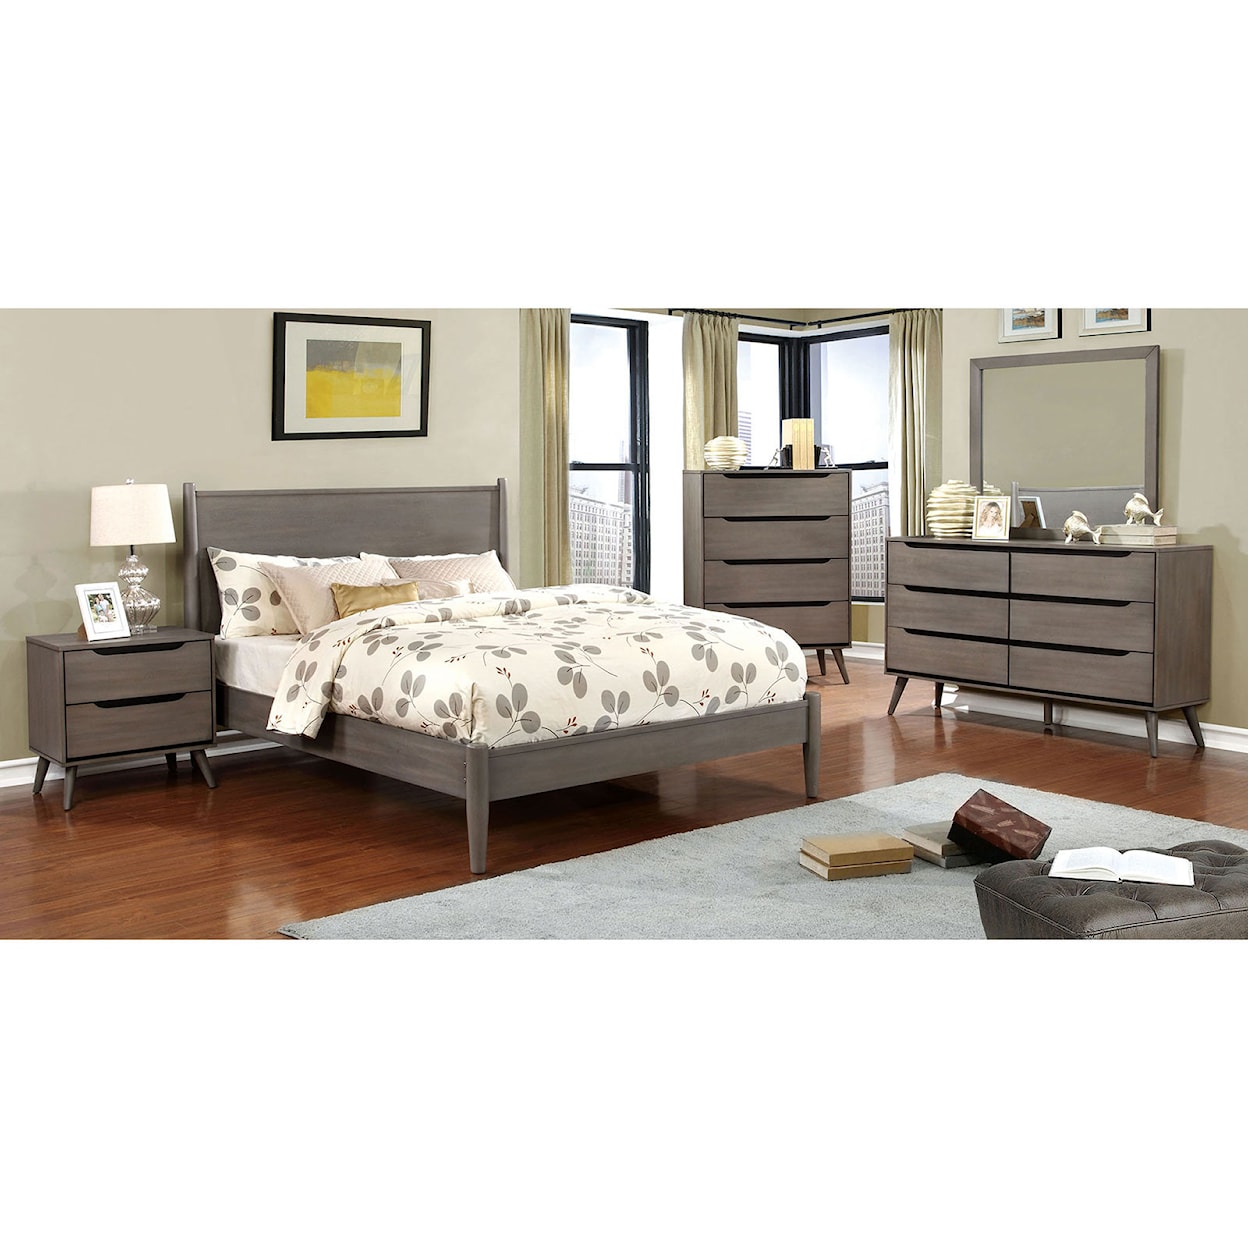 Furniture of America Lennart 4 Pc. Full Bedroom Set